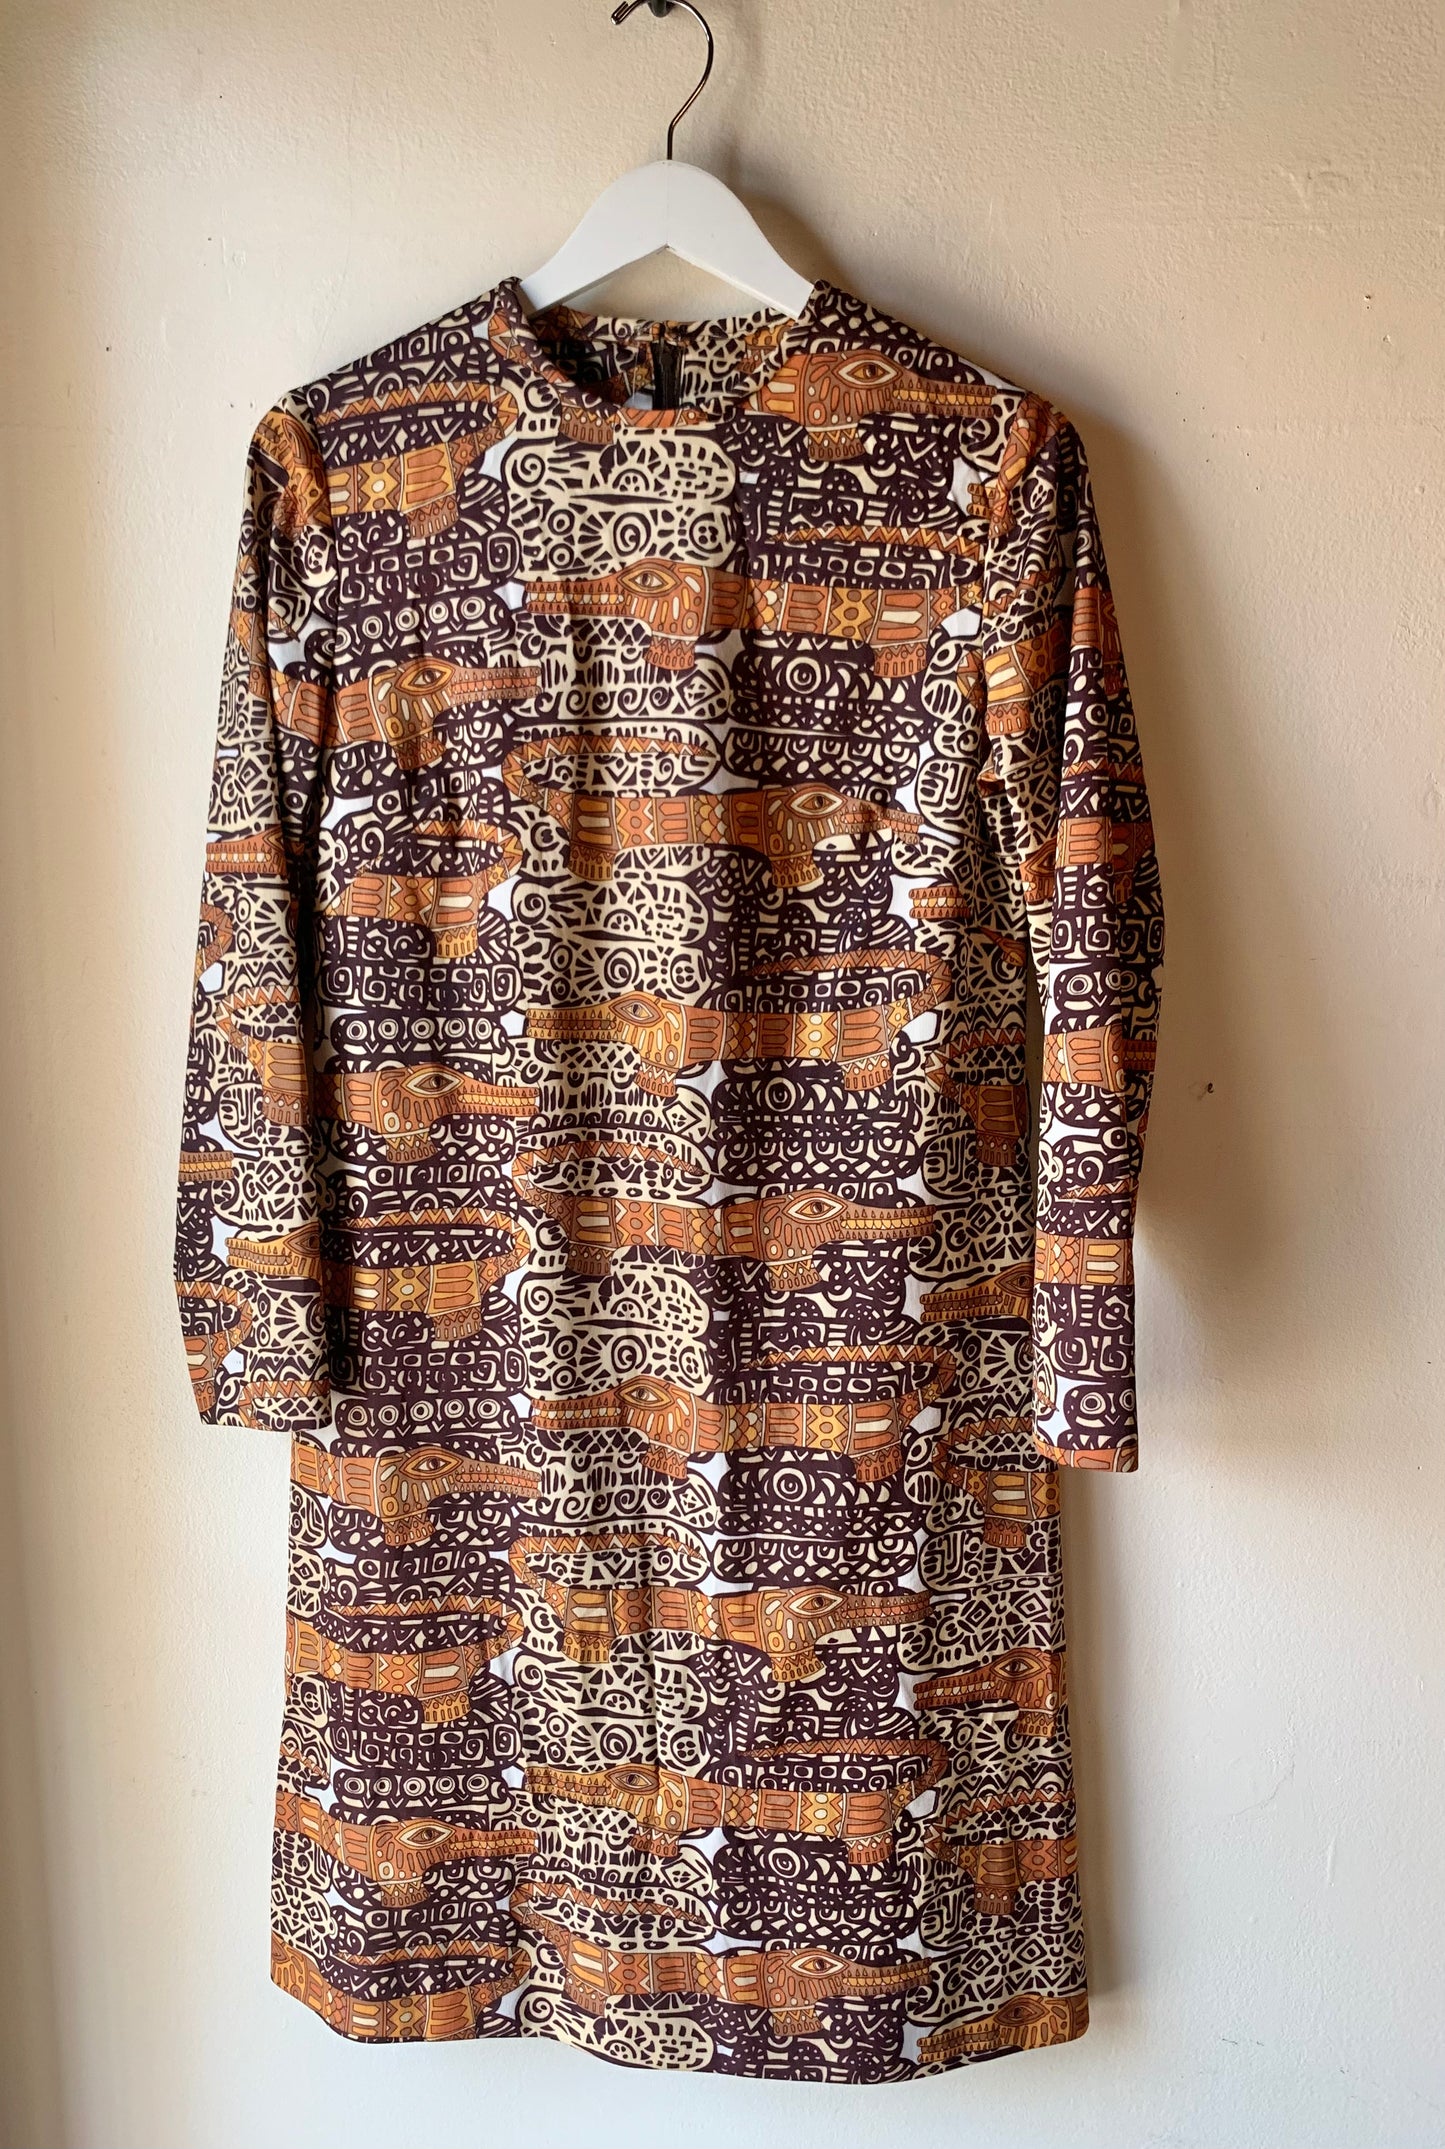 1970s Crocodile Print Dress (M/L)